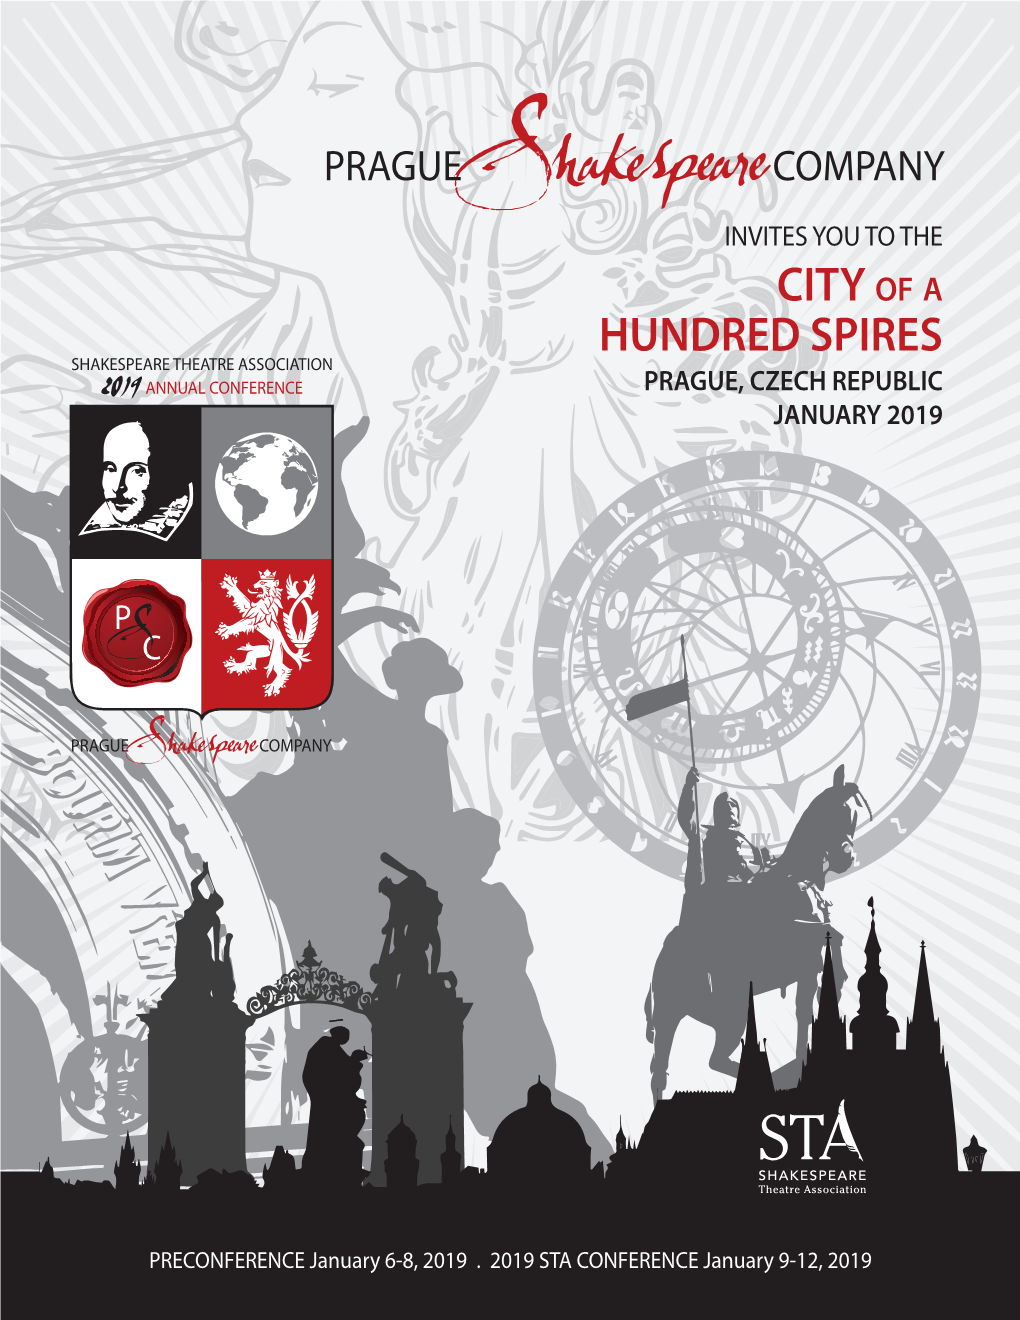 Shakespeare Theatre Association Conference in Prague, Czech Republic